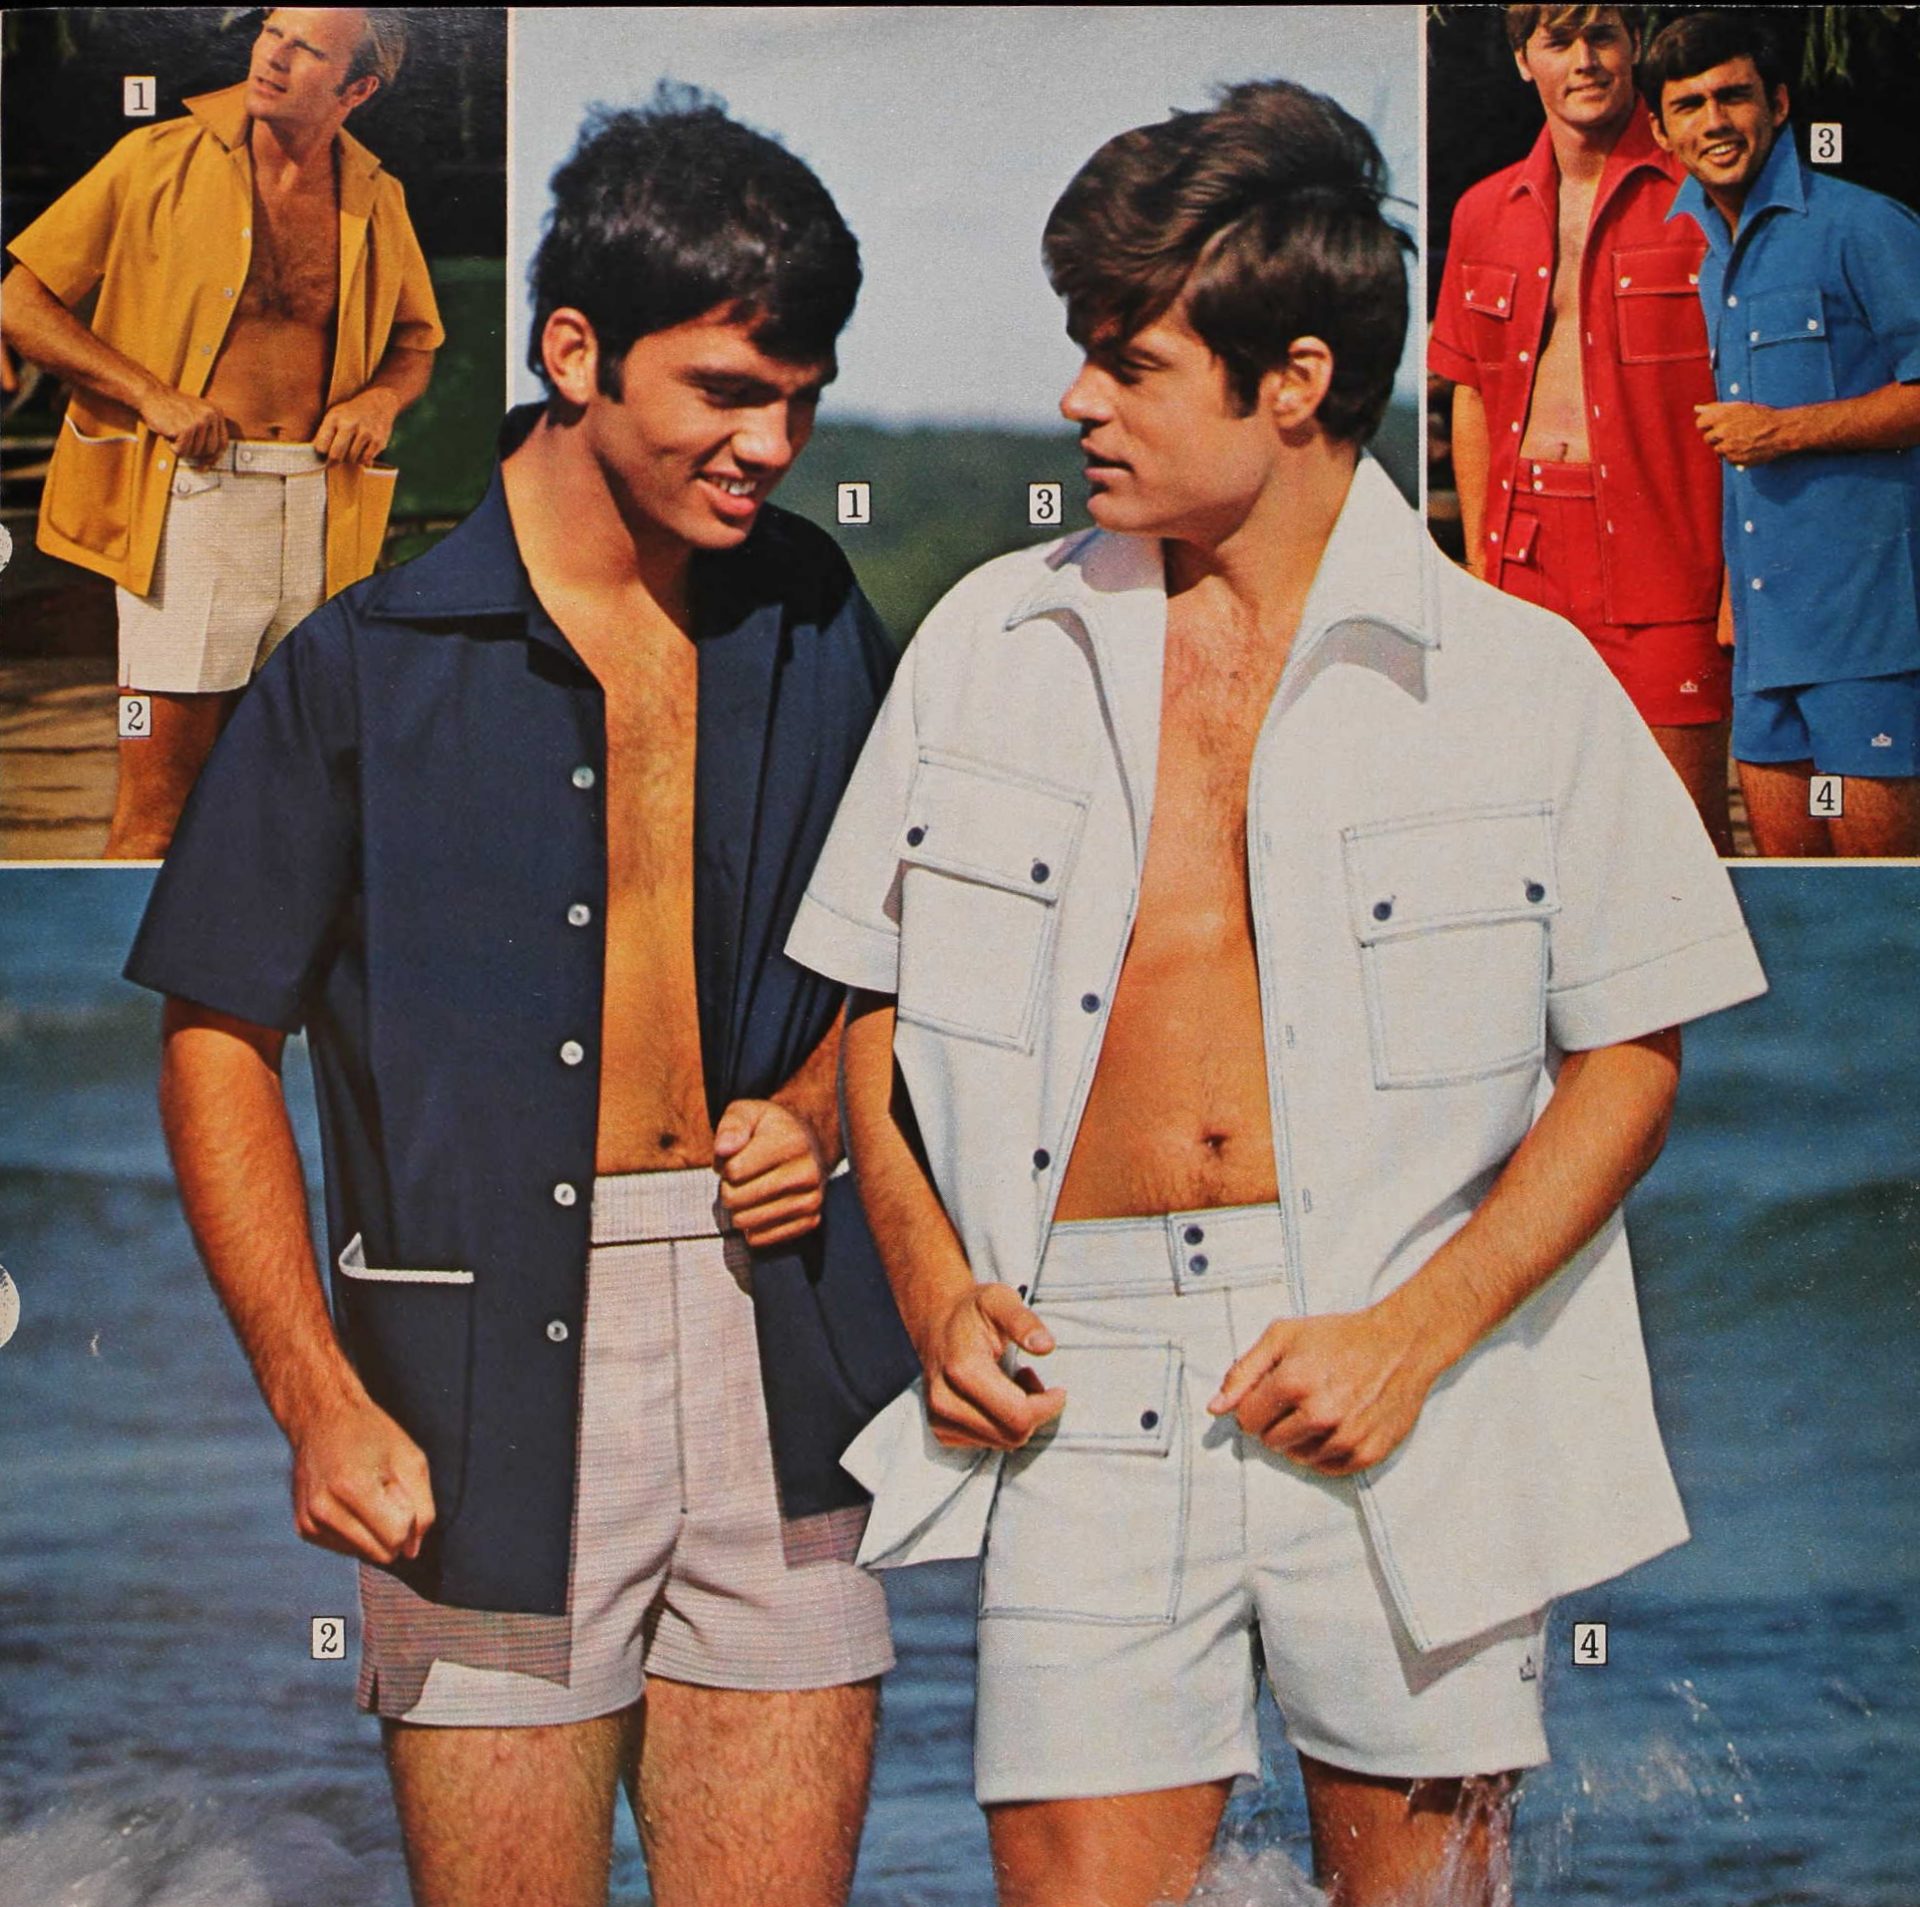 Retro Men's Swim Trunks - 1960s, 1970s, 1980s History